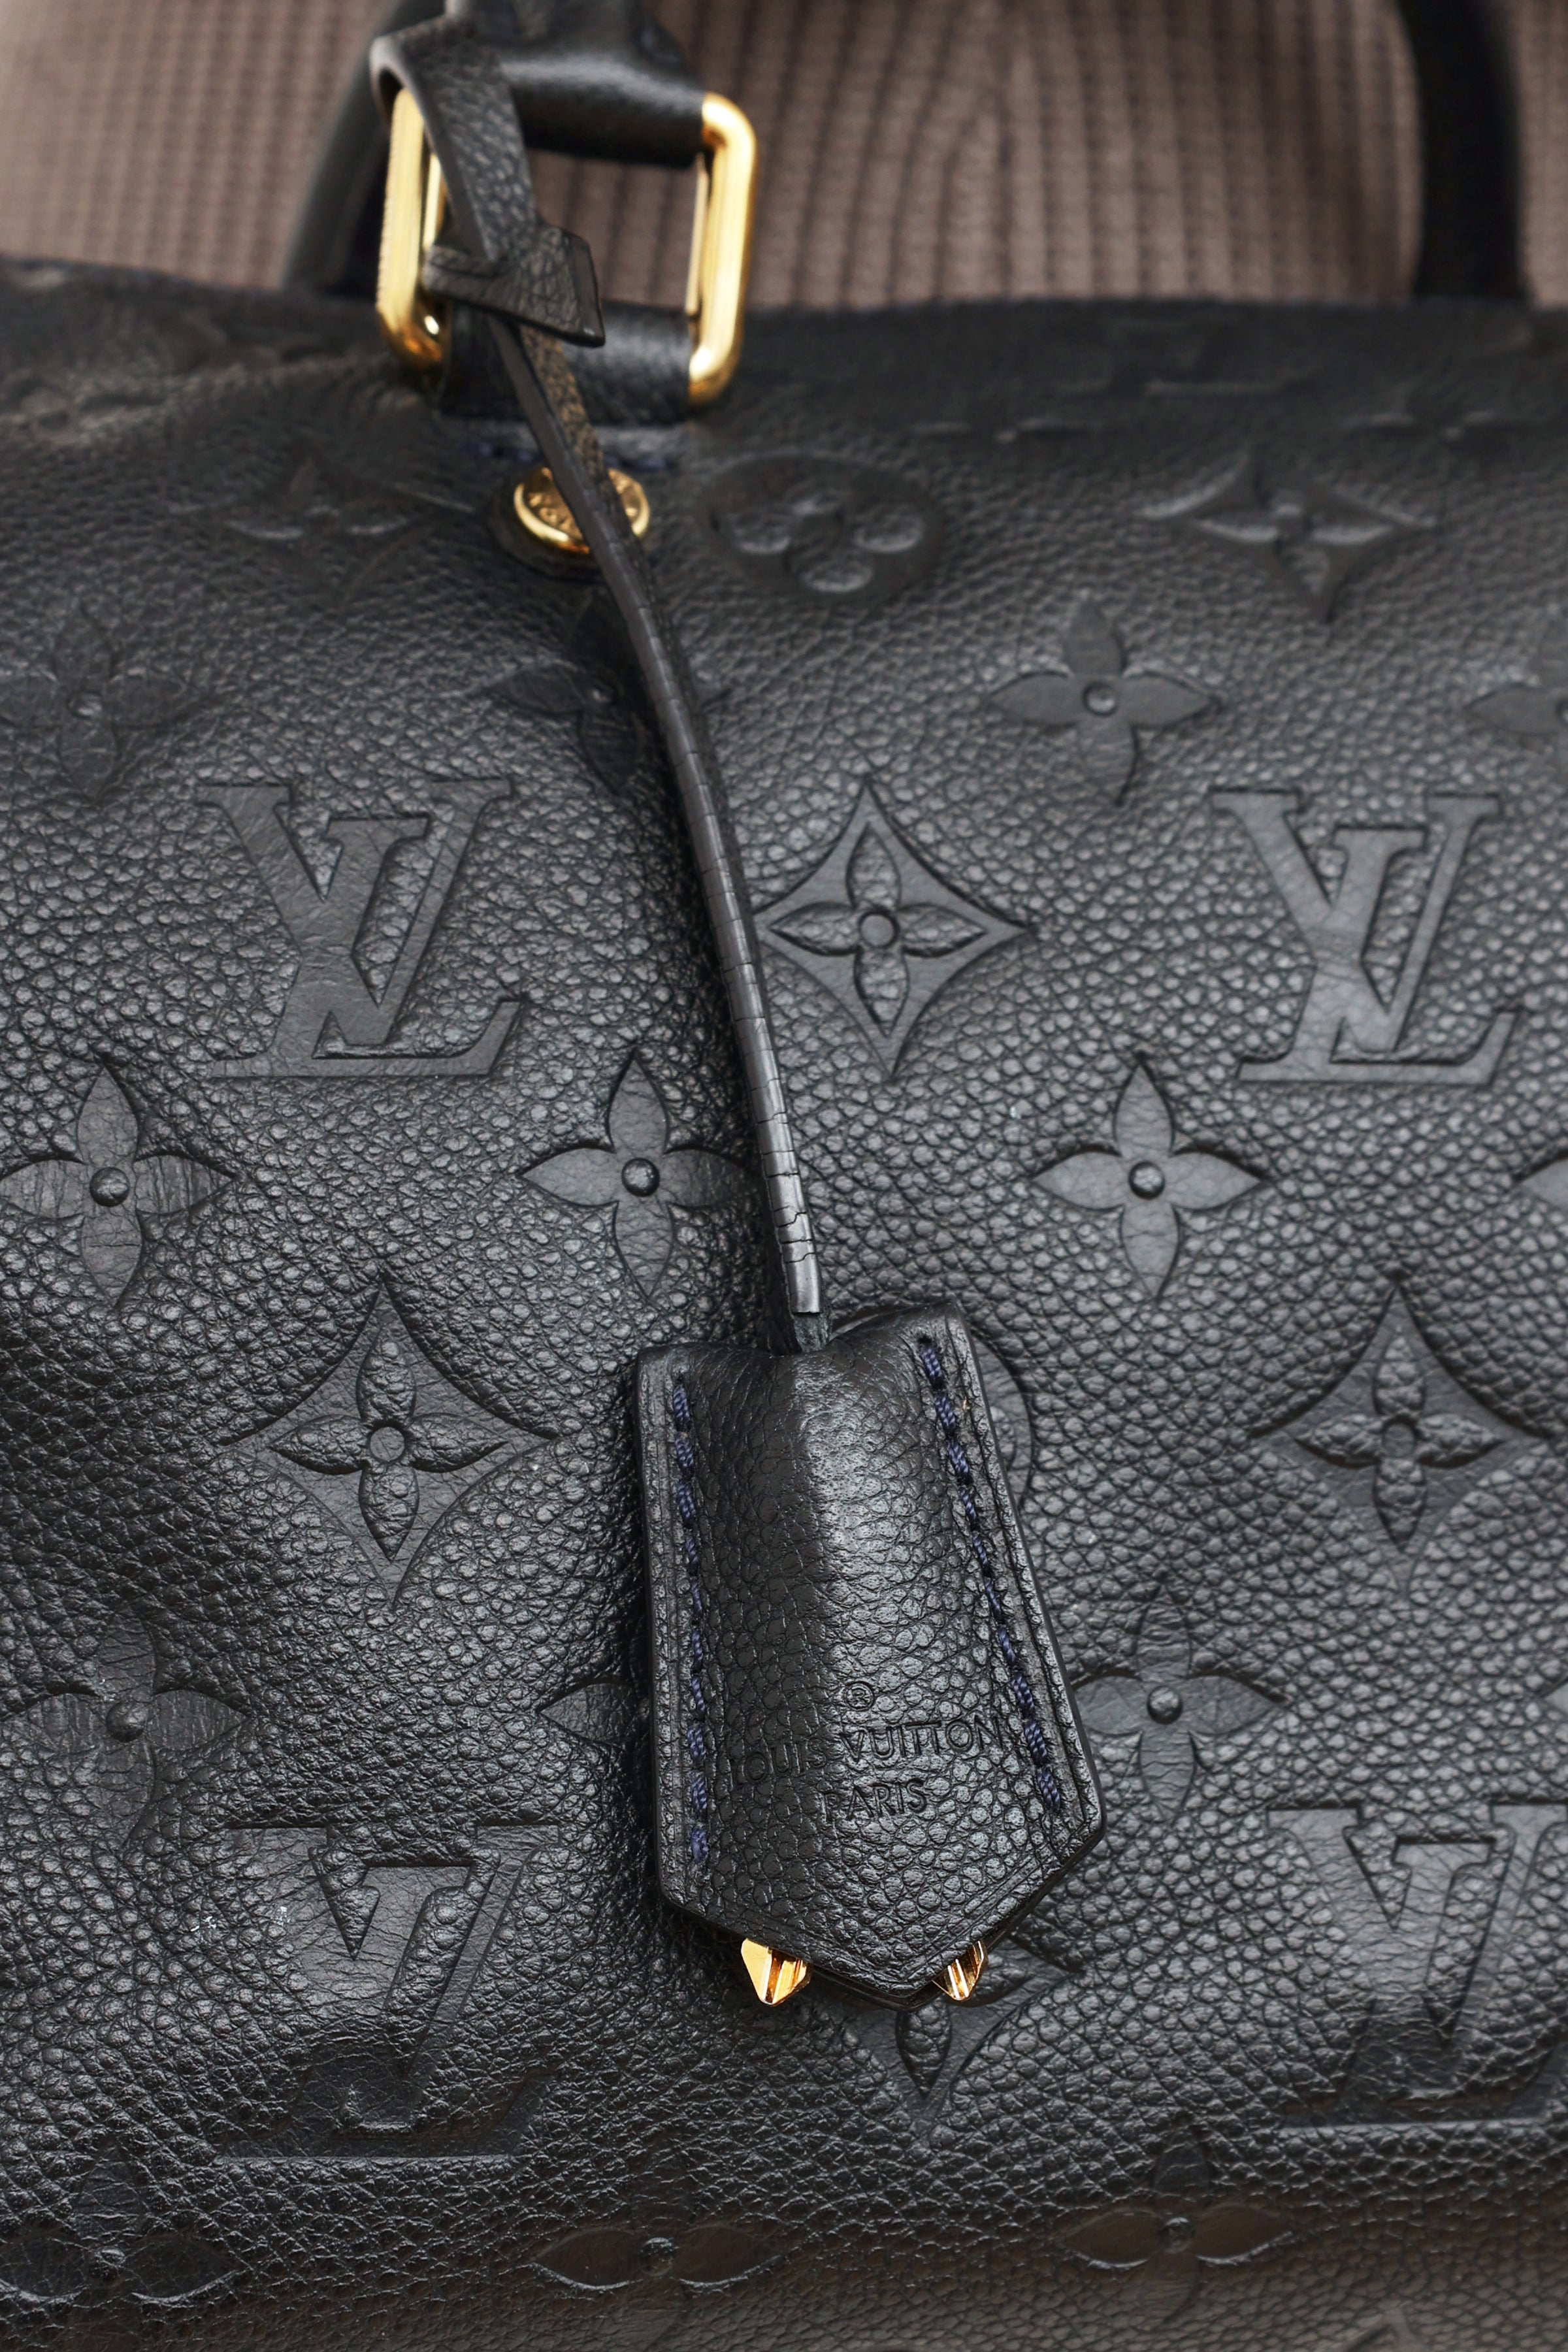 Sold at Auction: Louis Vuitton Empreinte Navy Blue Speedy Bandouliere Bag